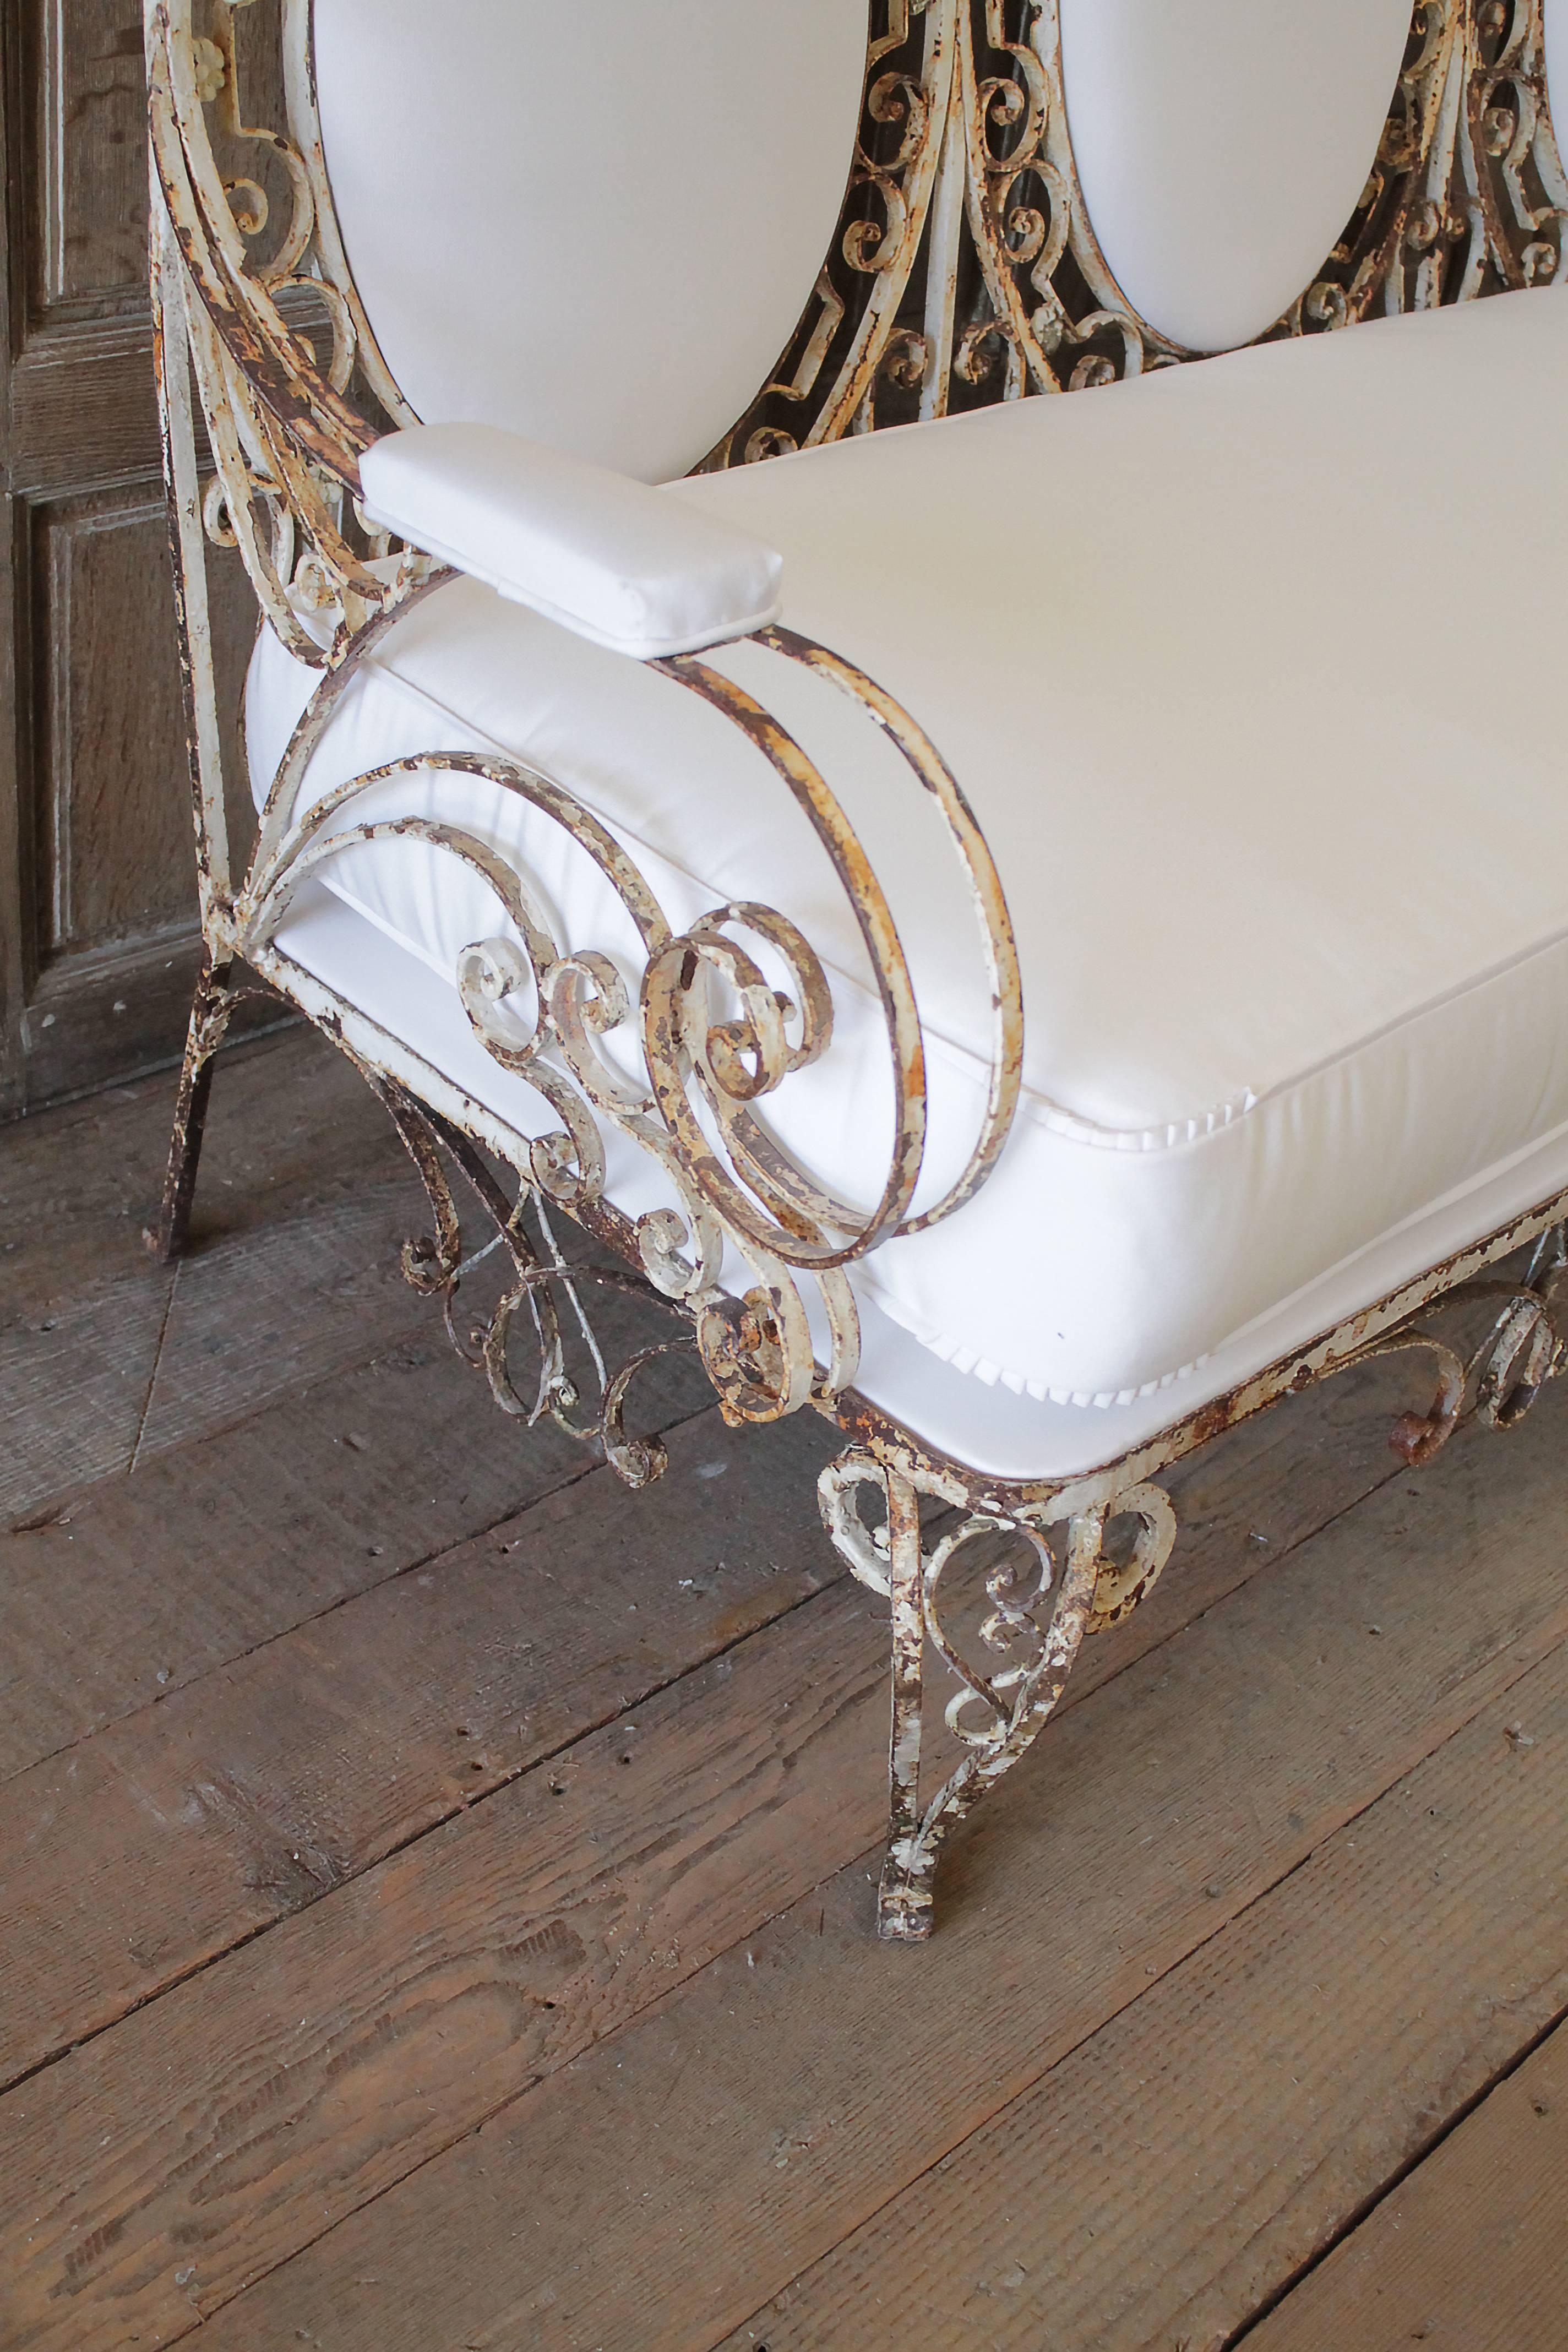 antique french sofas